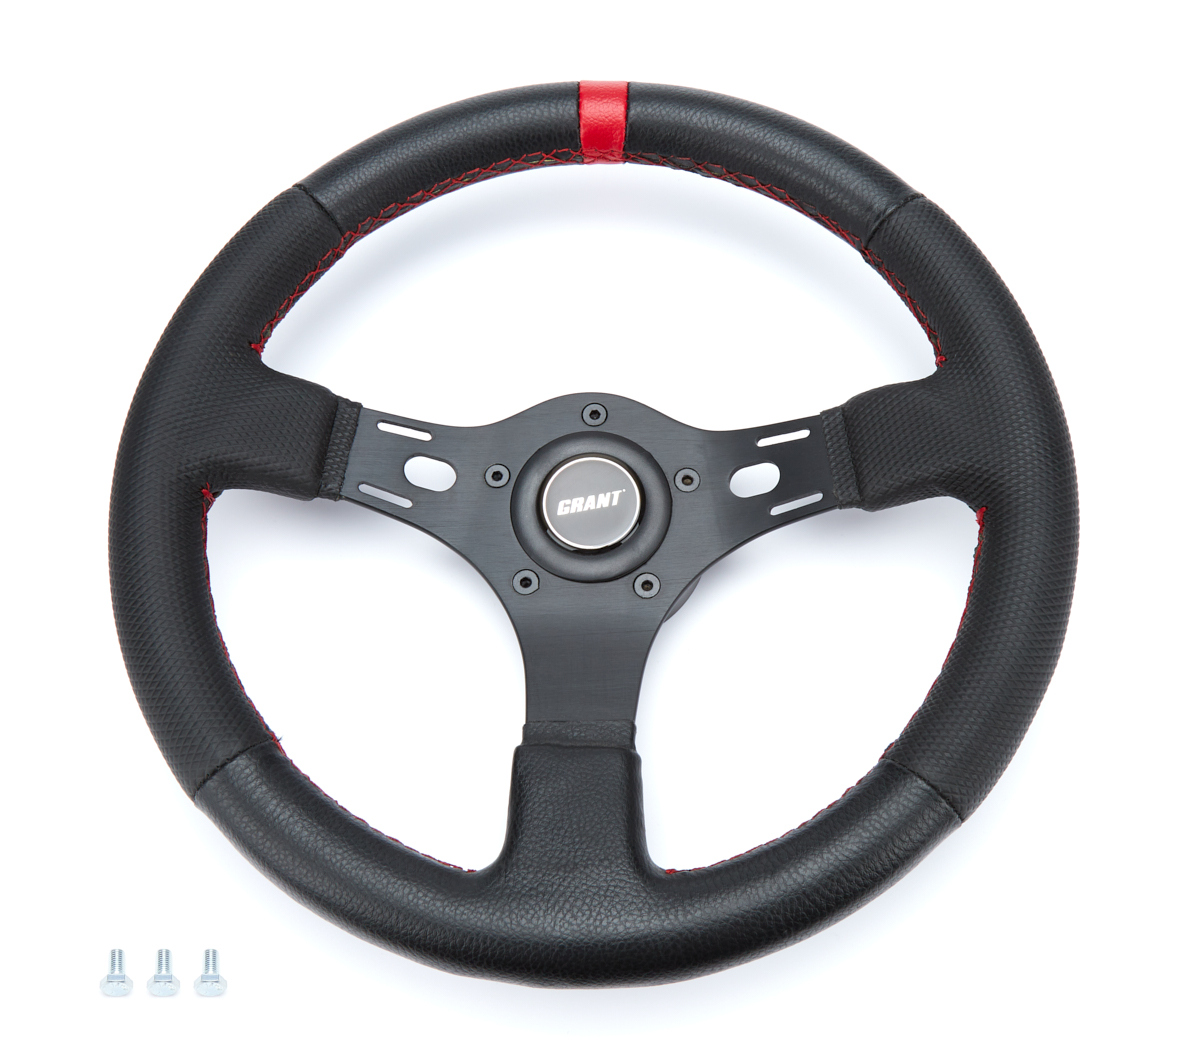 Grant 1073 Steering Wheel, Performance Race, 13 in Diameter, 1 in Dish, 3-Spoke, Black Leather Grip, Aluminum, Black Anodized, Each